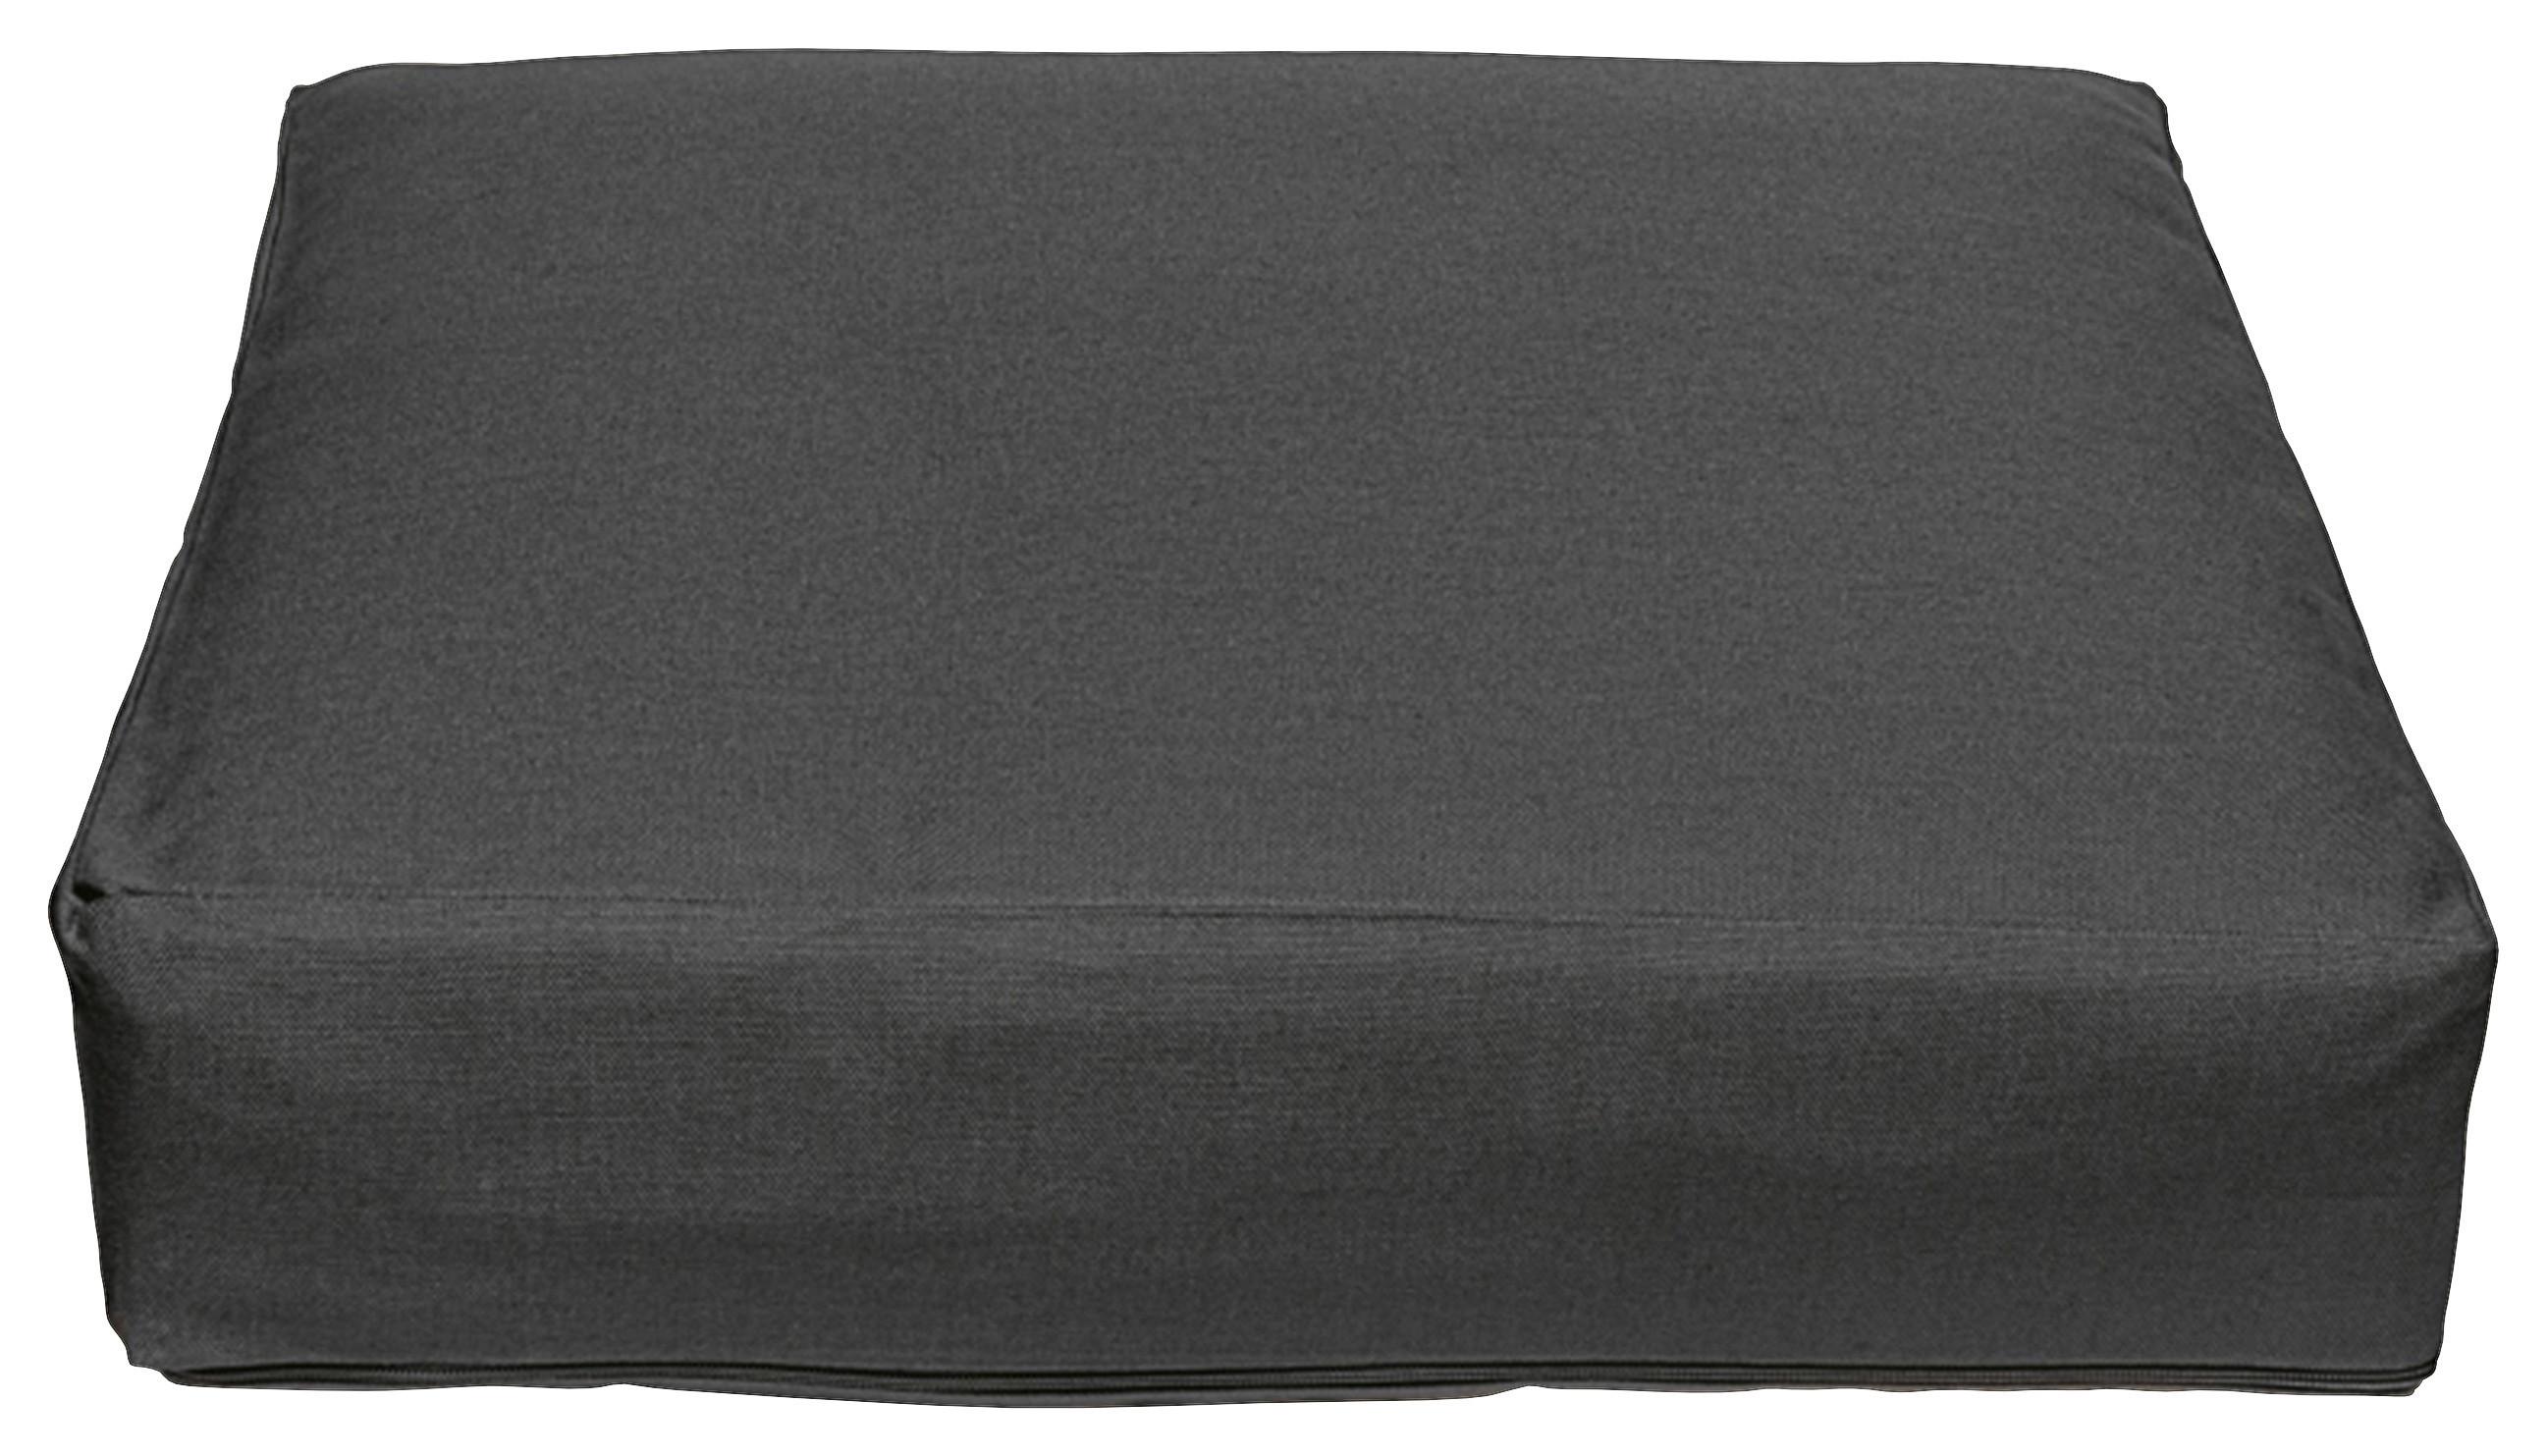 Boxkissen Lars in Anthrazit ca. 40x40x8cm - Anthrazit, KONVENTIONELL, Textil (40/40/8cm) - Mary's